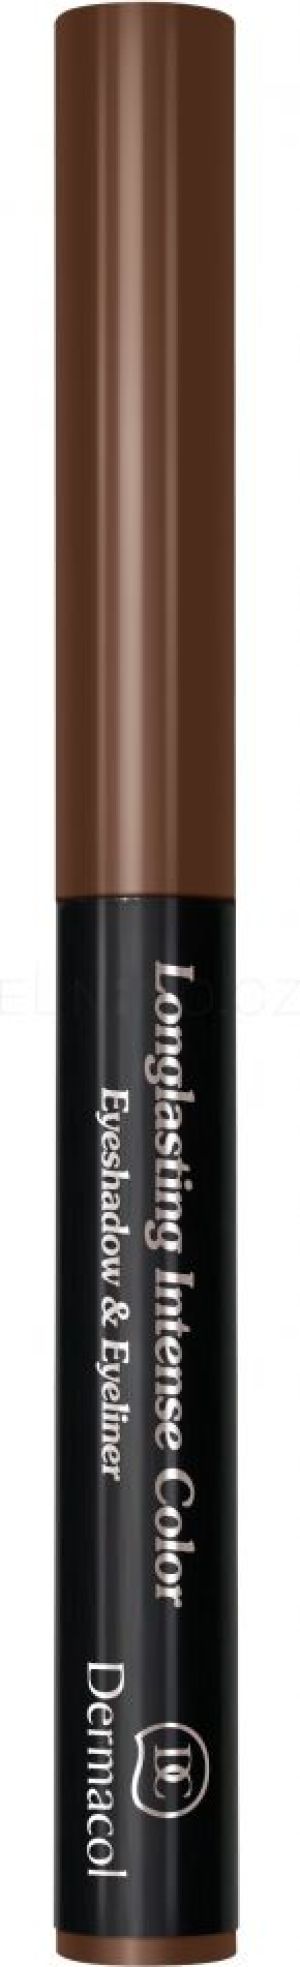 Dermacol Long-Lasting Intense Colour Eyeshadow & Eyeliner W 1.6g 07 1